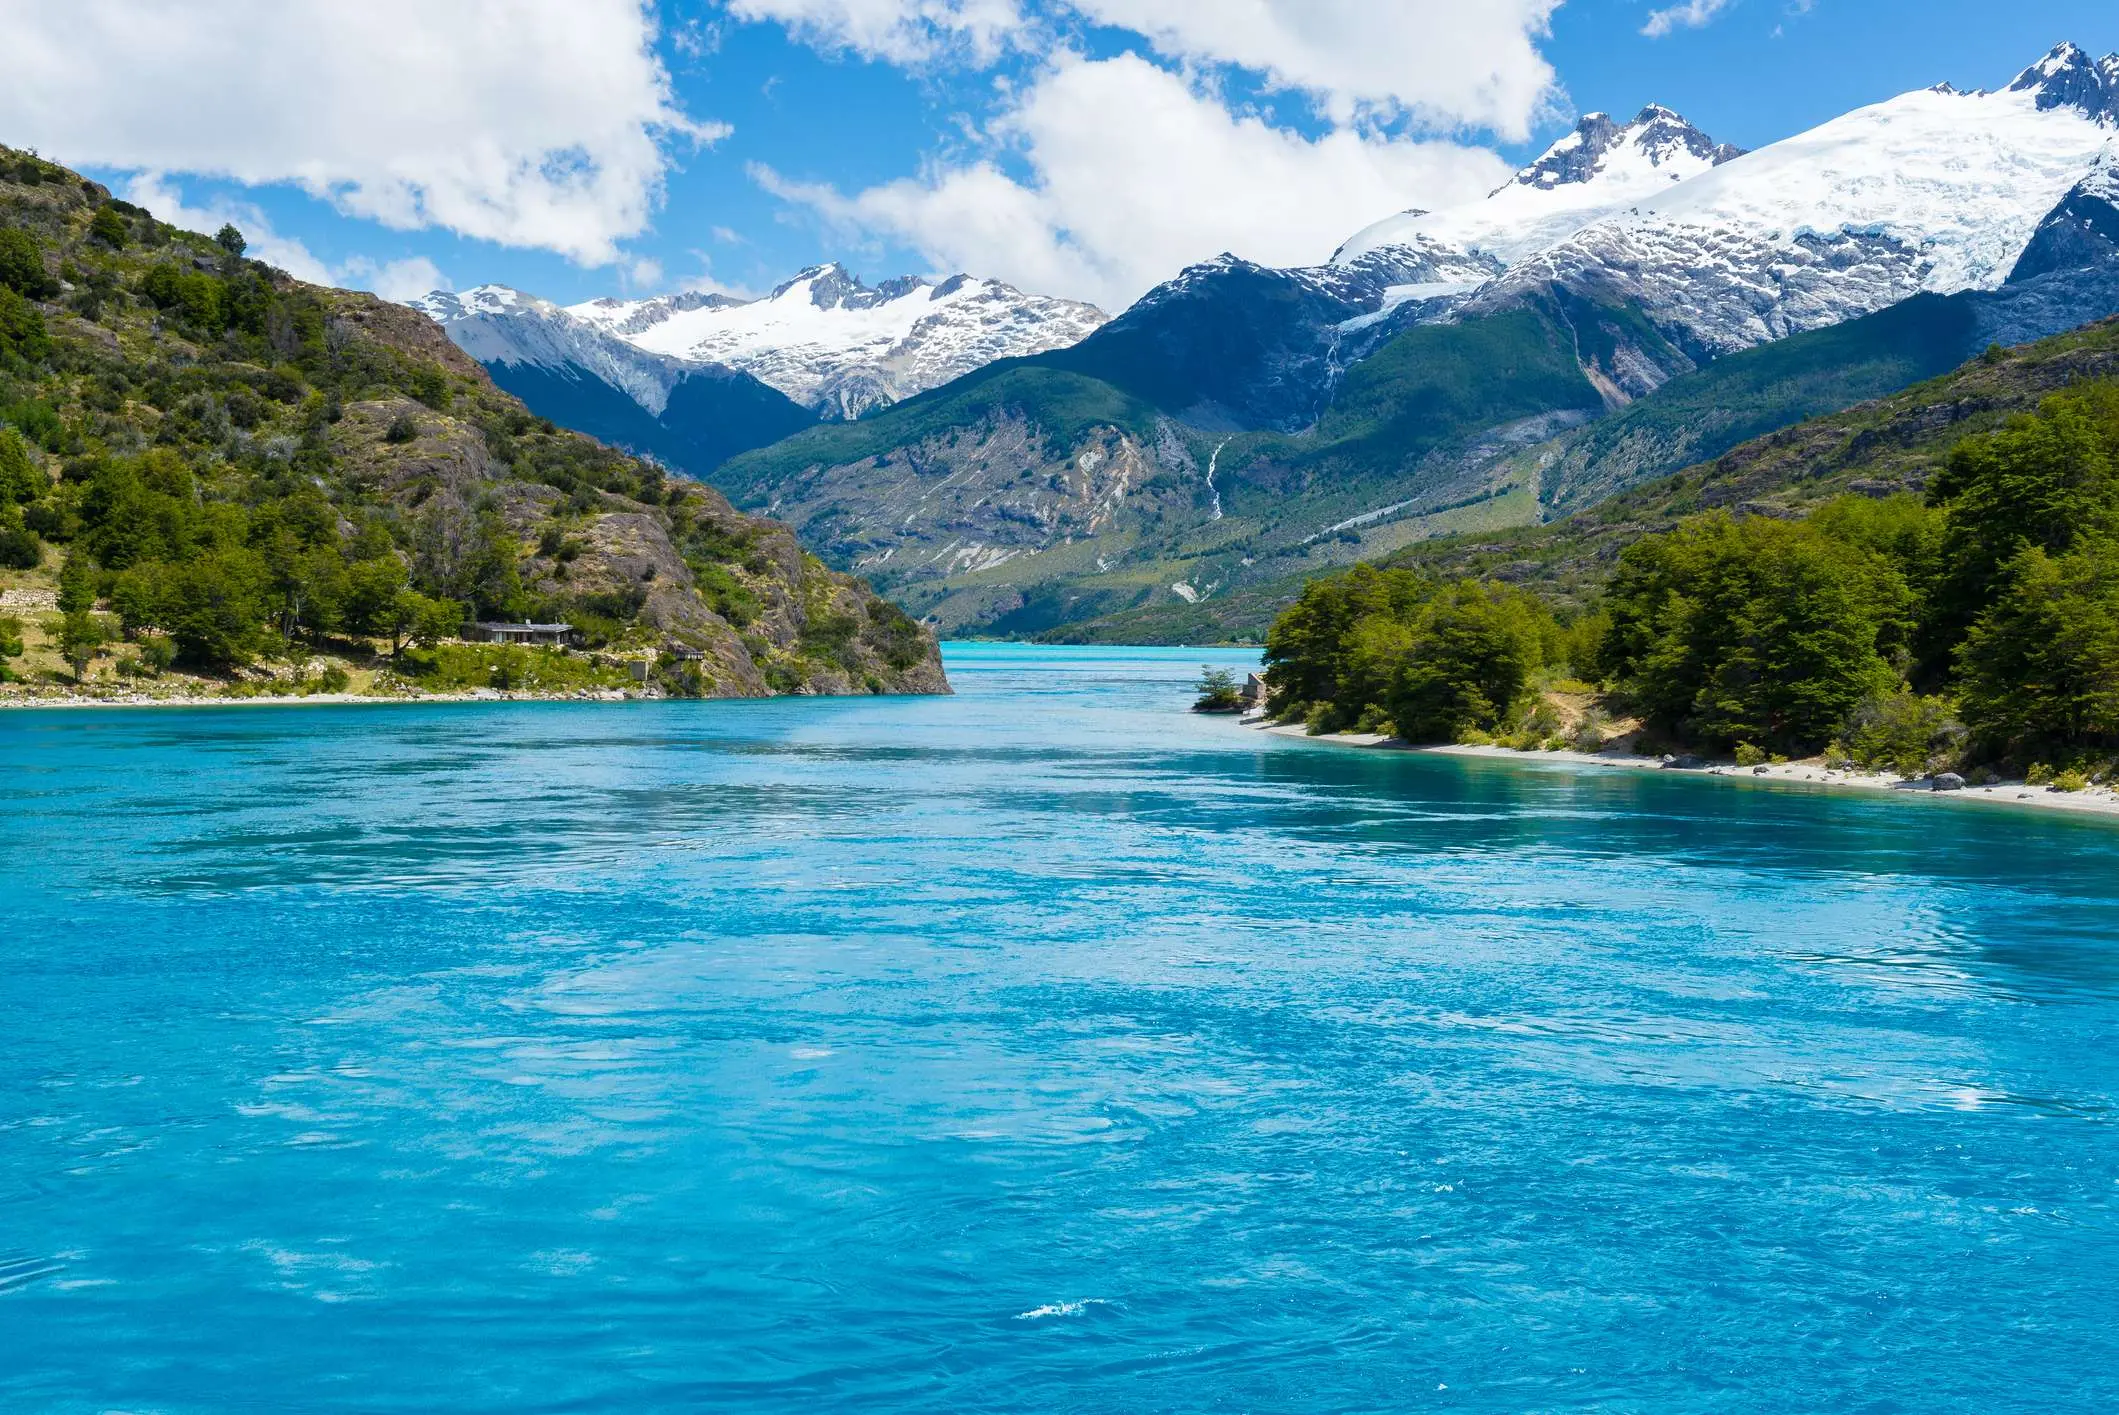 lagunas de chile - Qué lagos tiene Chile